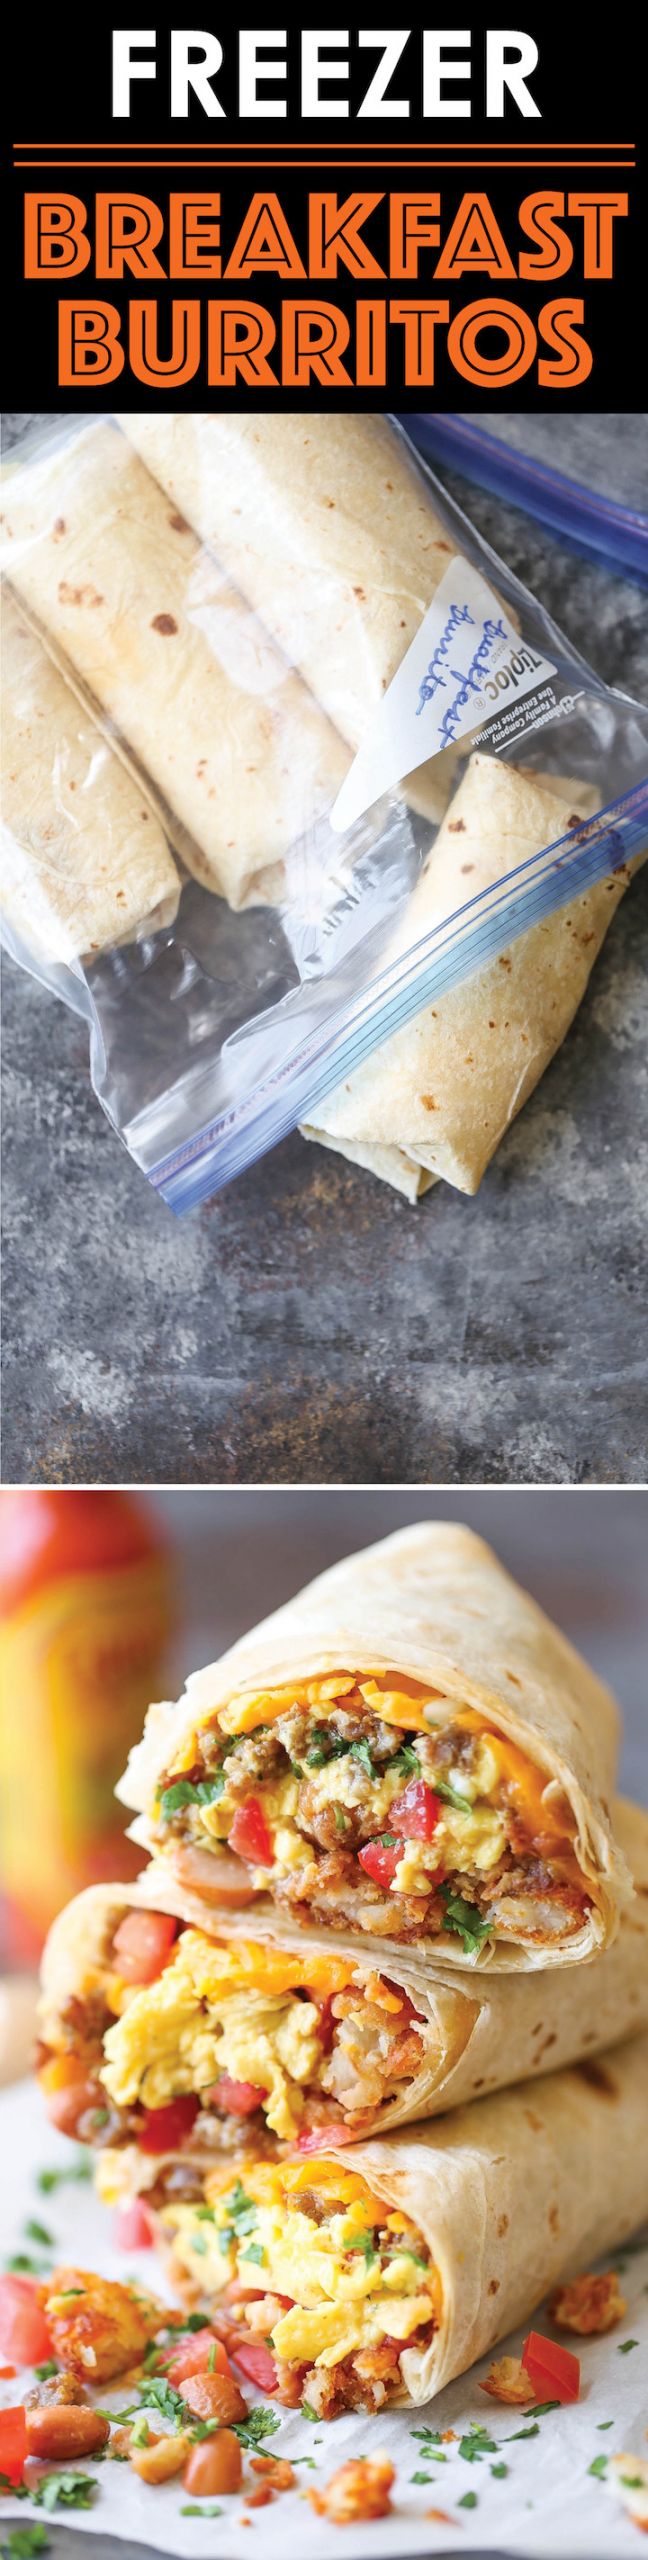 Freeze Breakfast Burritos
 Back to School Breakfast Recipes